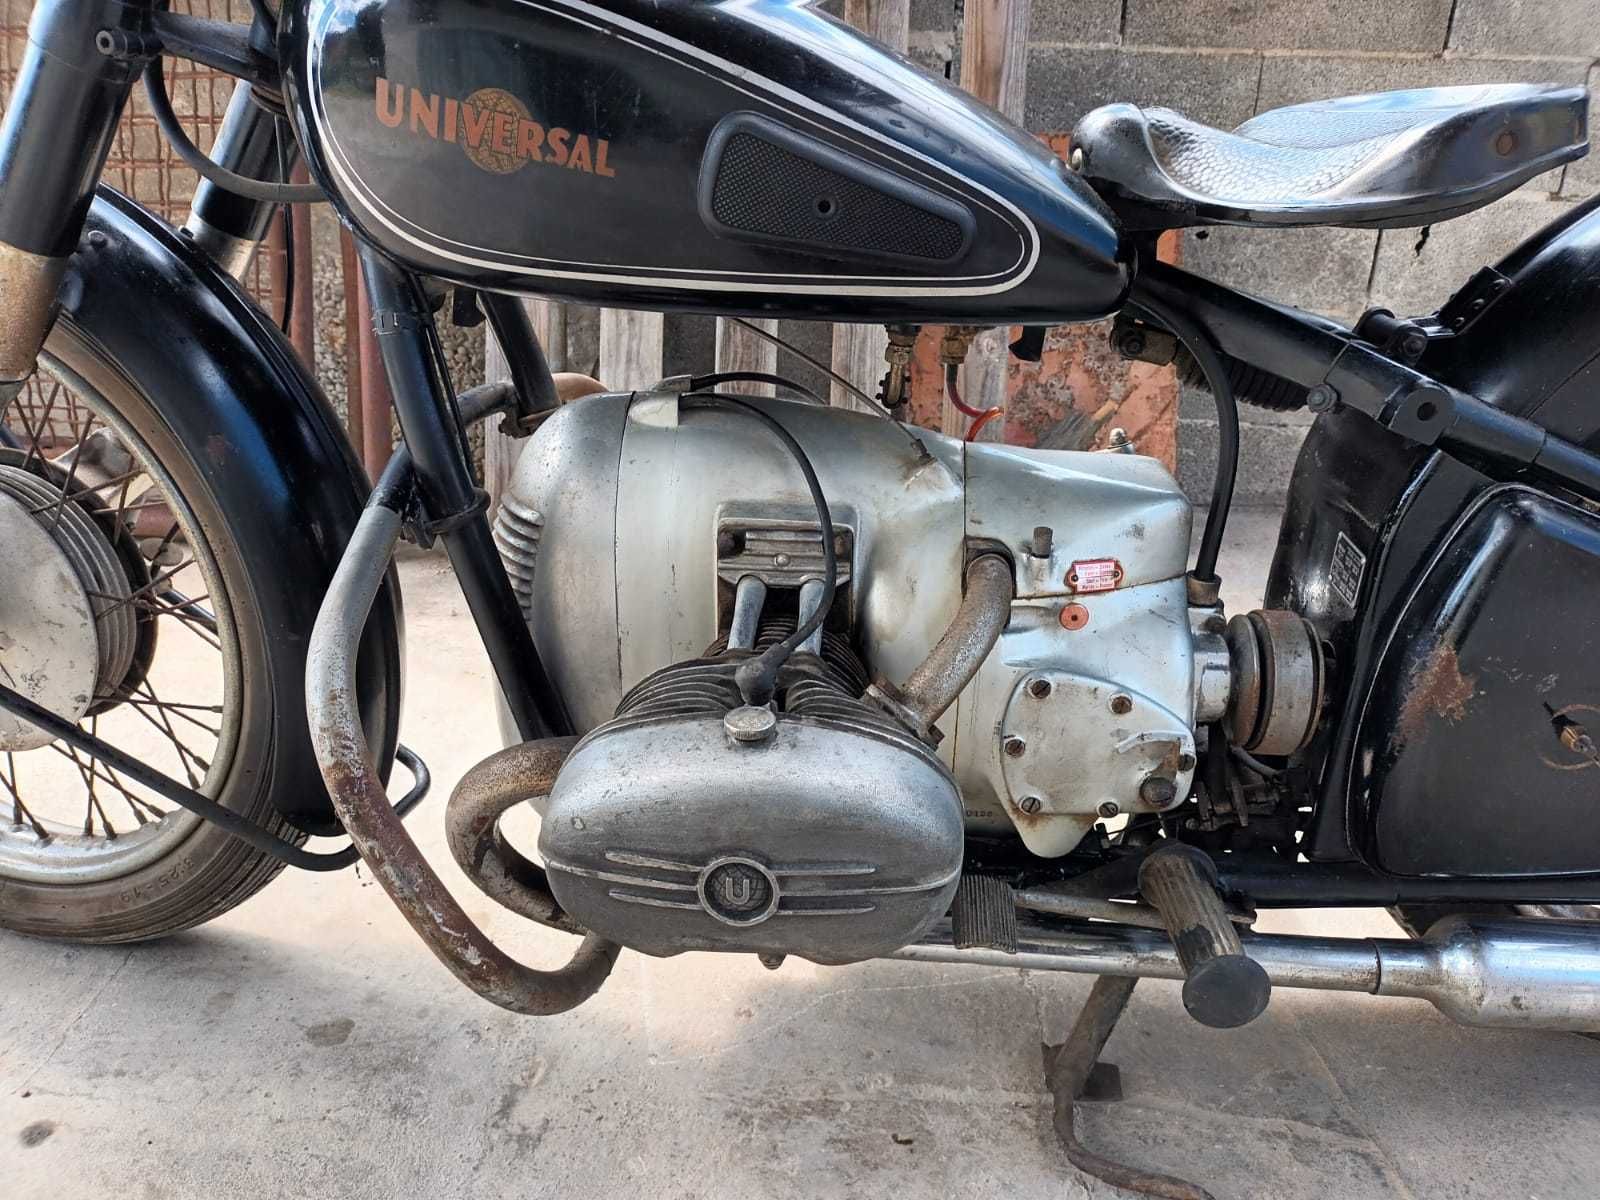 Universal motocykl 1951